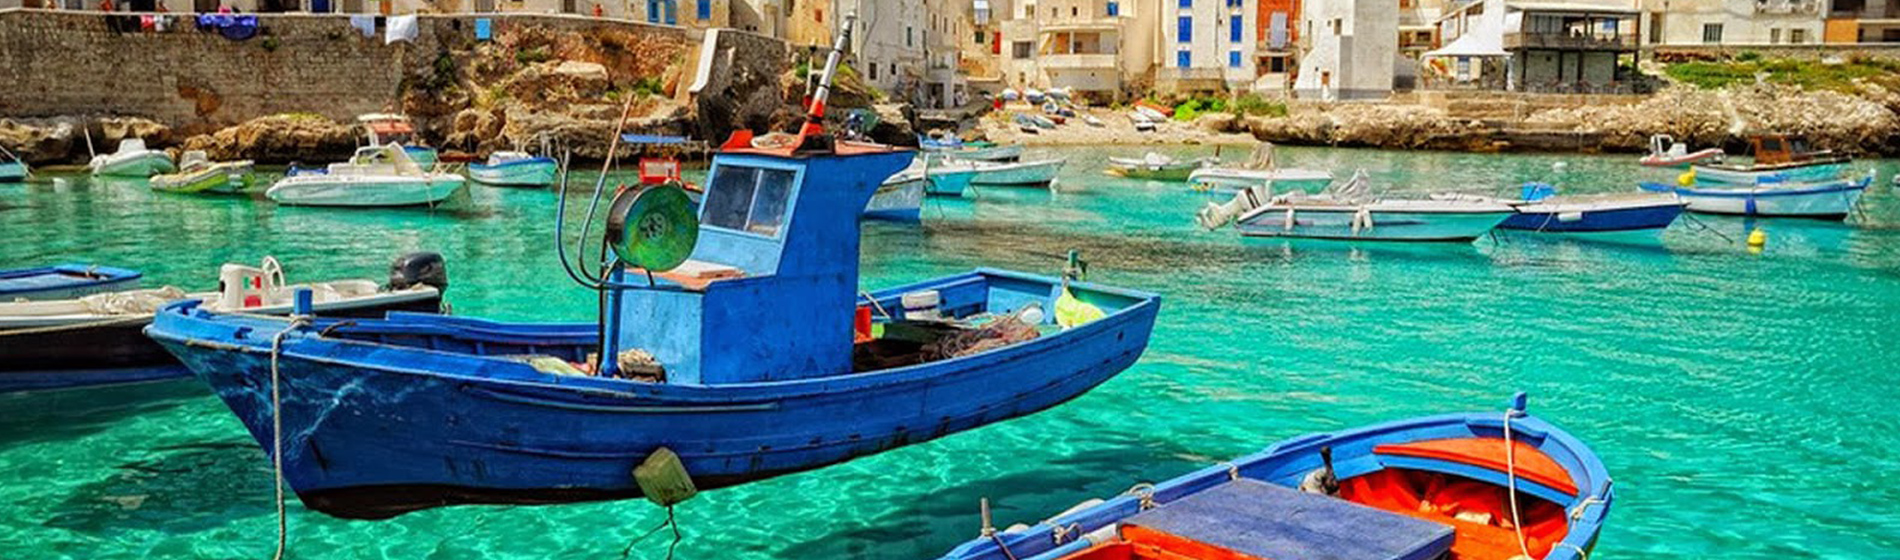 Best of Sicily Tours: Why Select Sicily as Tour Destination